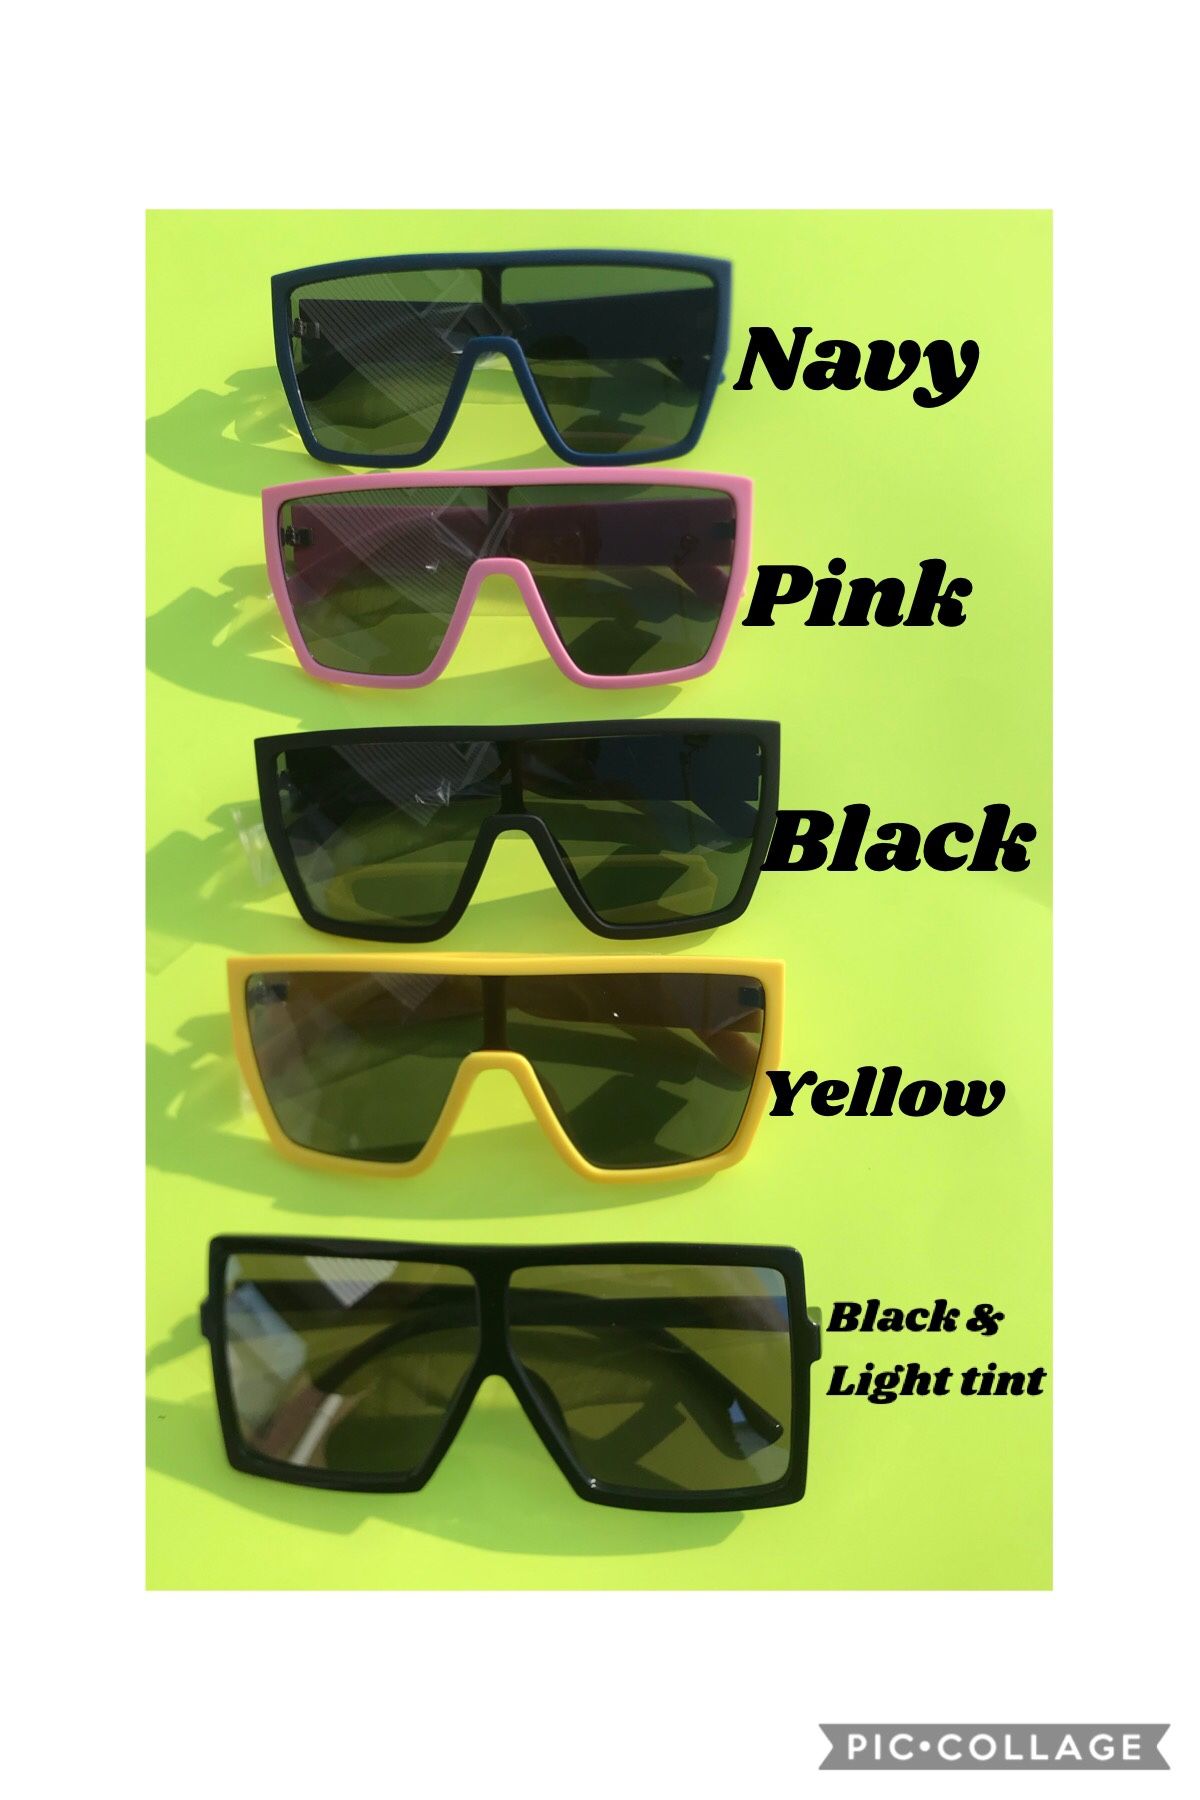 Stylish affordable sunglasses $8 each